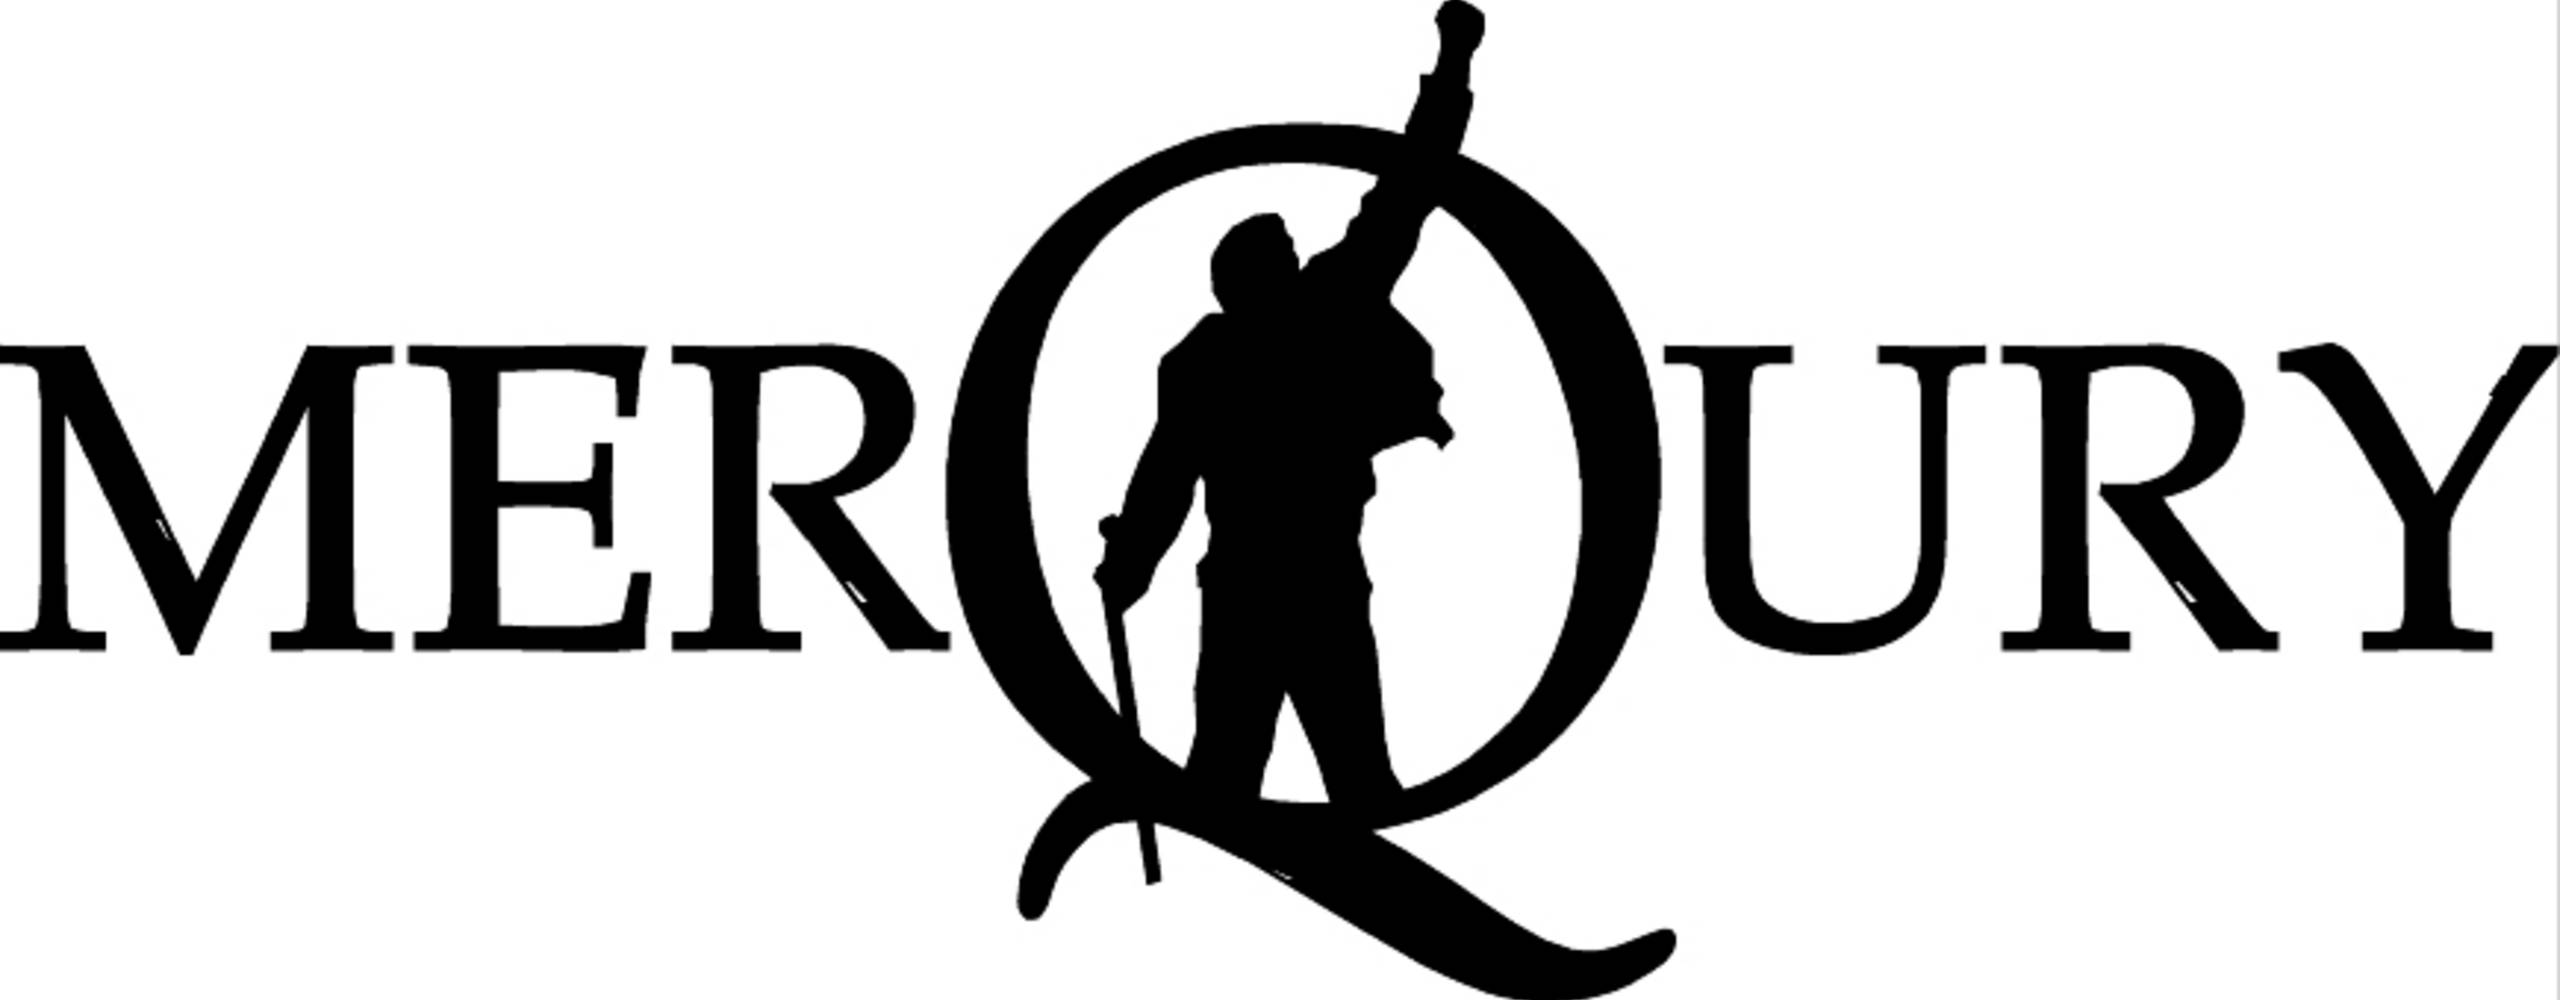 merqury logo ©MerQury